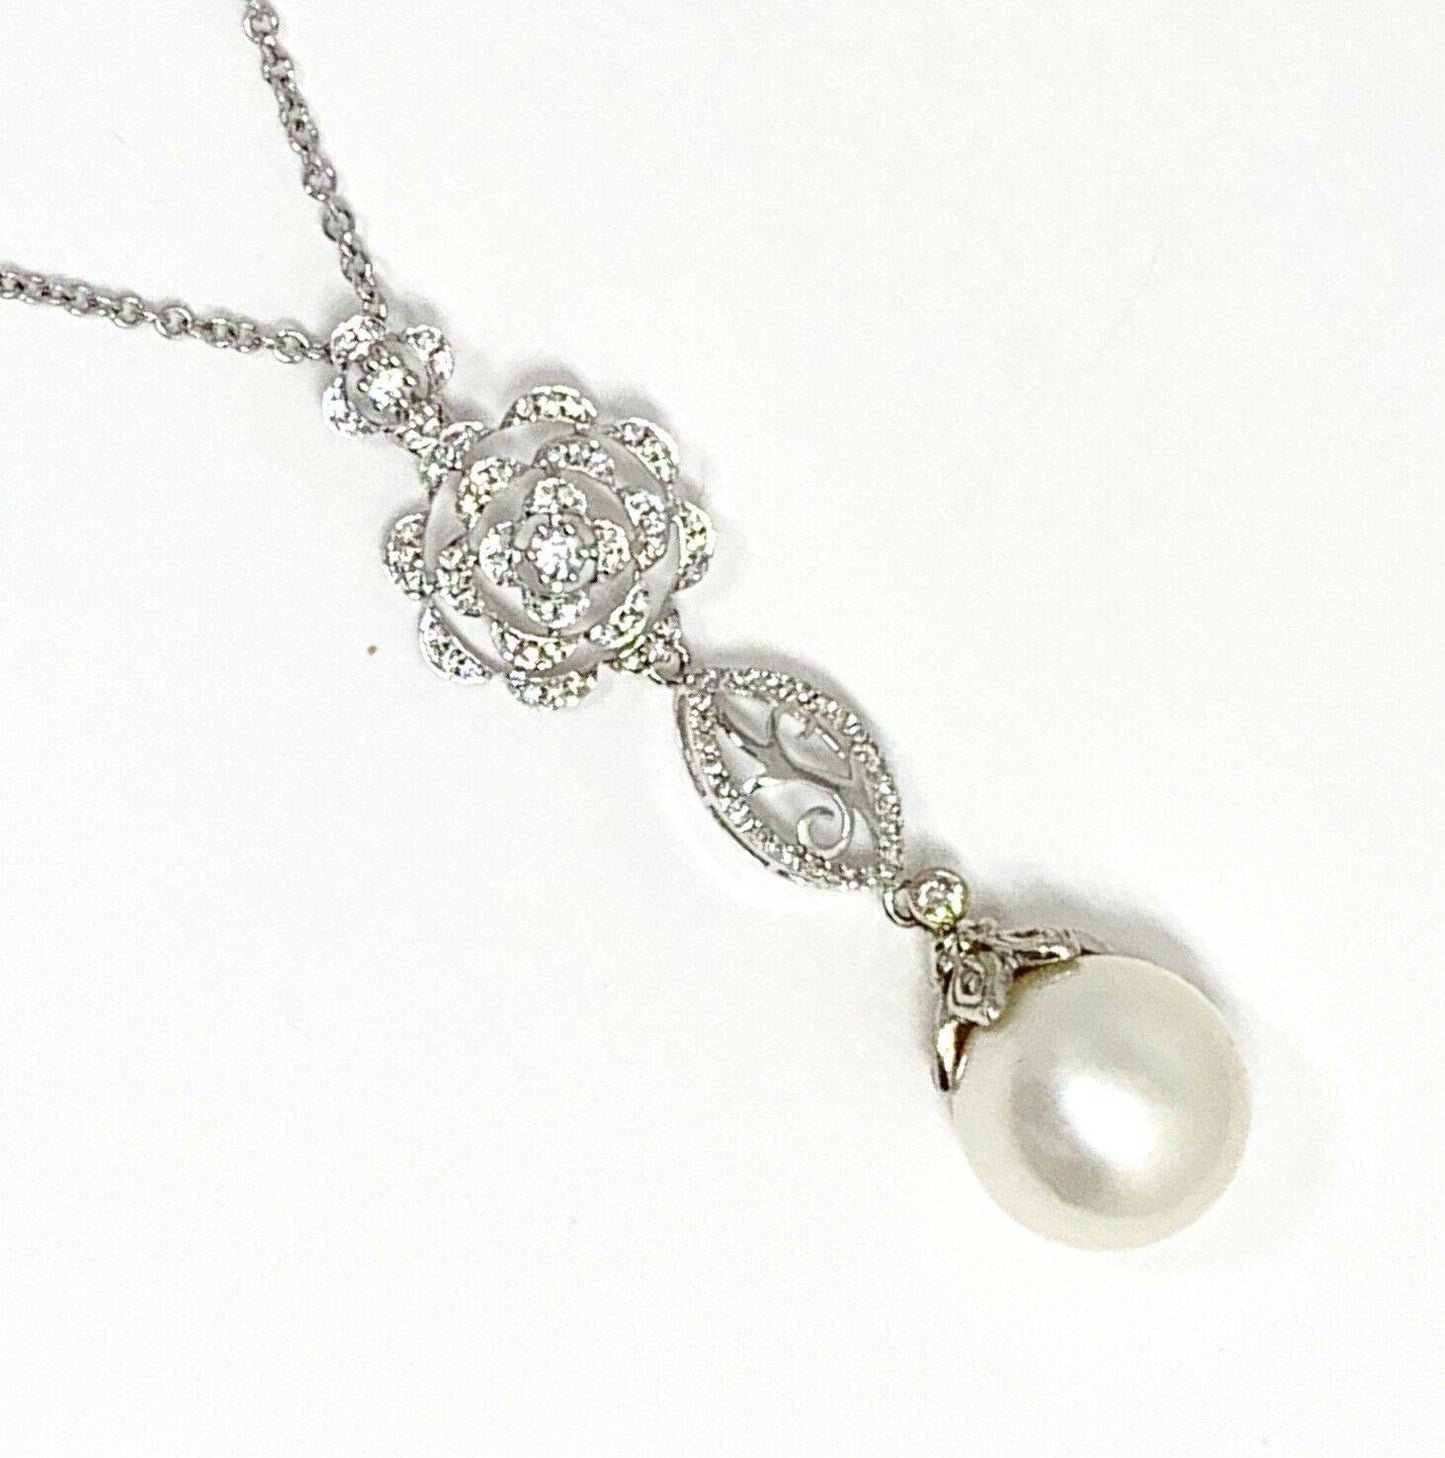 Diamond South Sea Pearl Necklace 14k Gold 12.85 mm 19.75" Certified $3,950 822599 - Certified Fine Jewelry